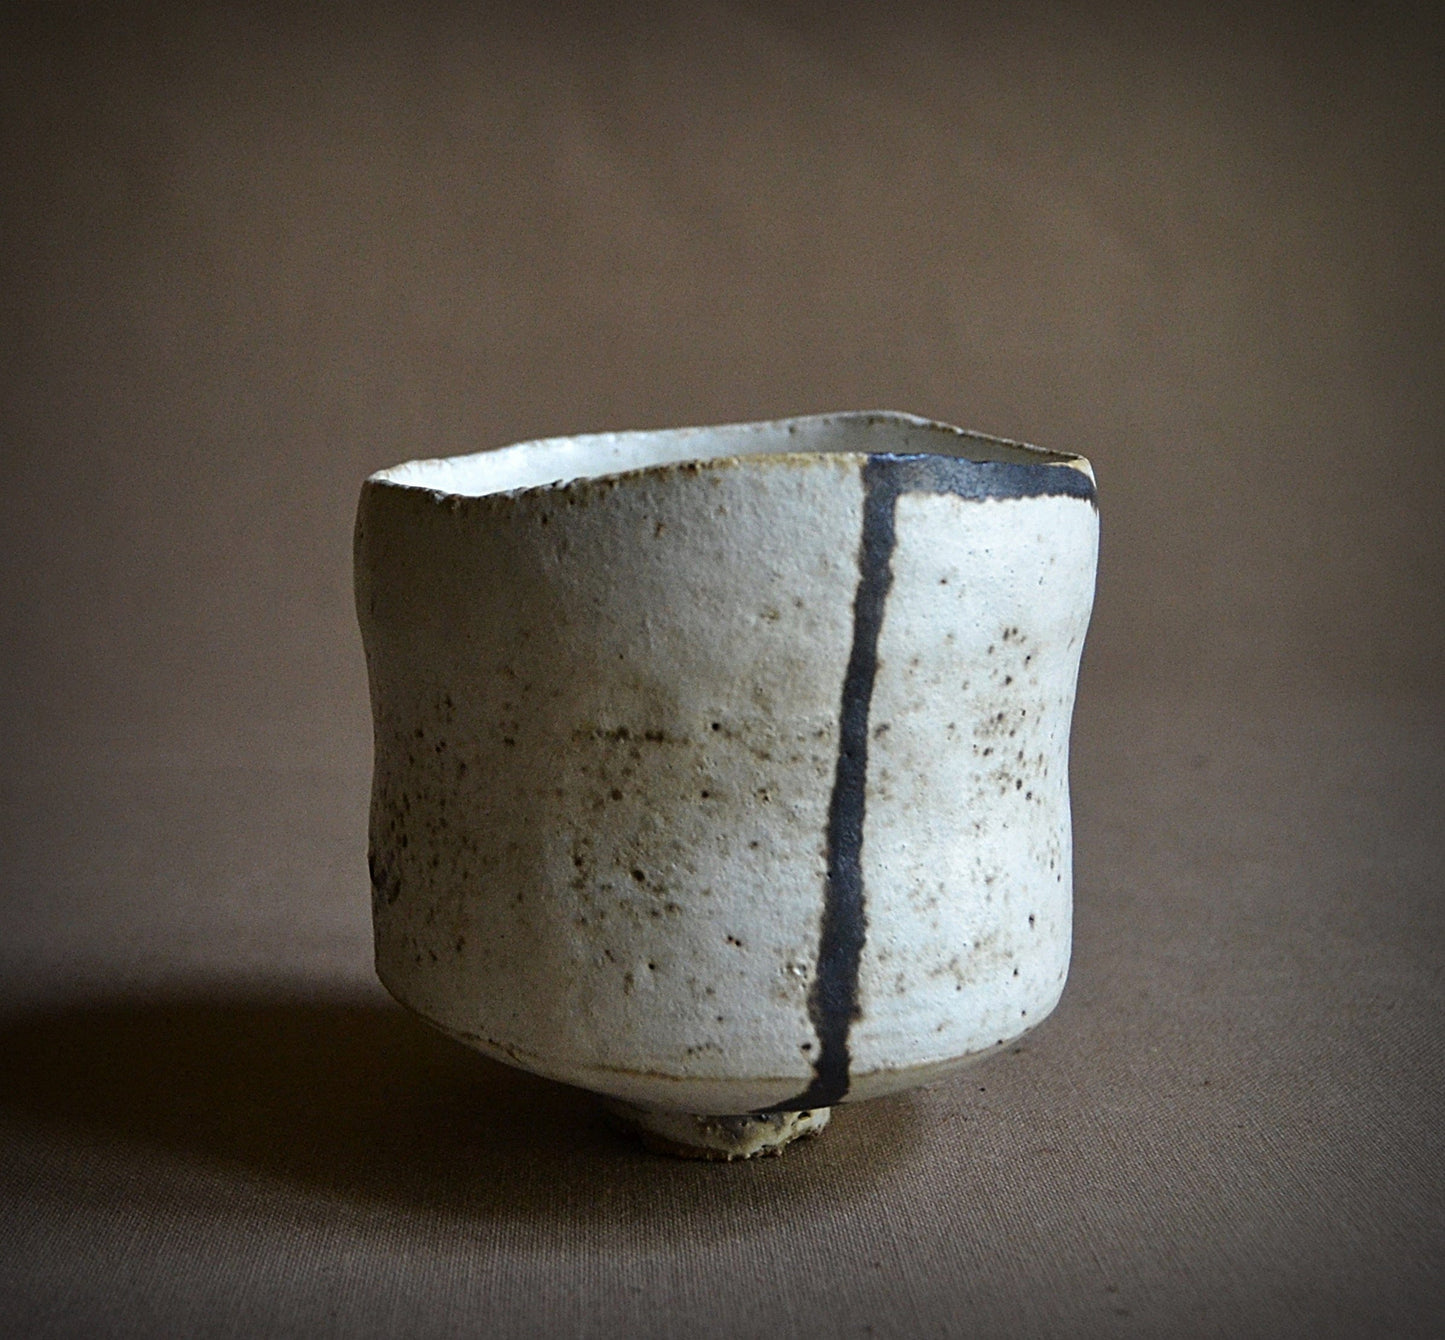 Chawan Ceramic Tea Cup No. 6 by Propeler Studio Tea Cup